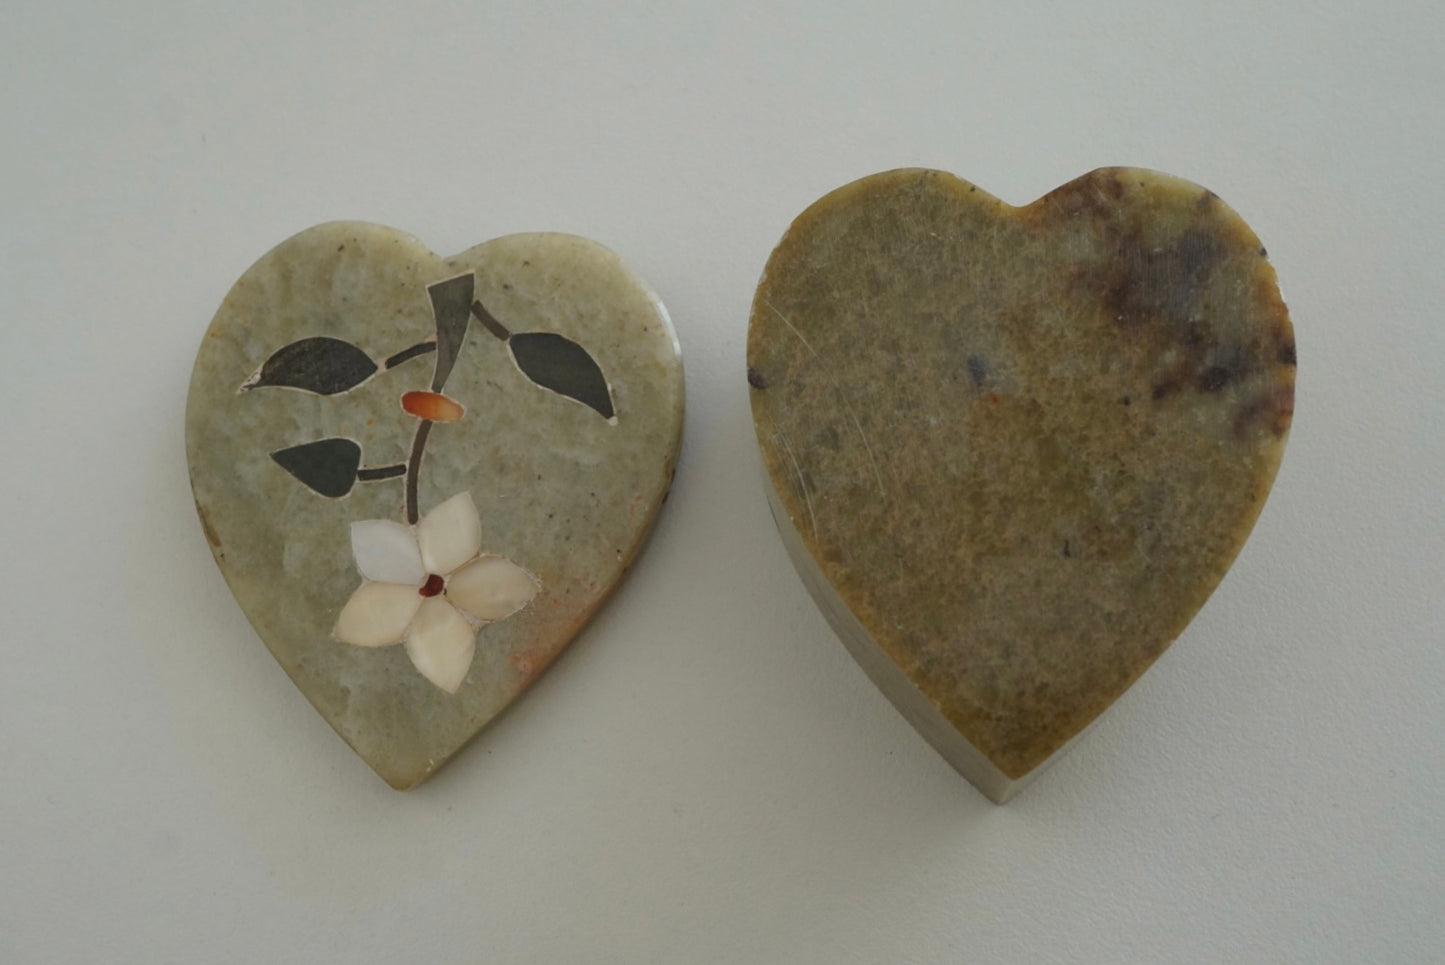 Stone Jewelry Case - Love Heart